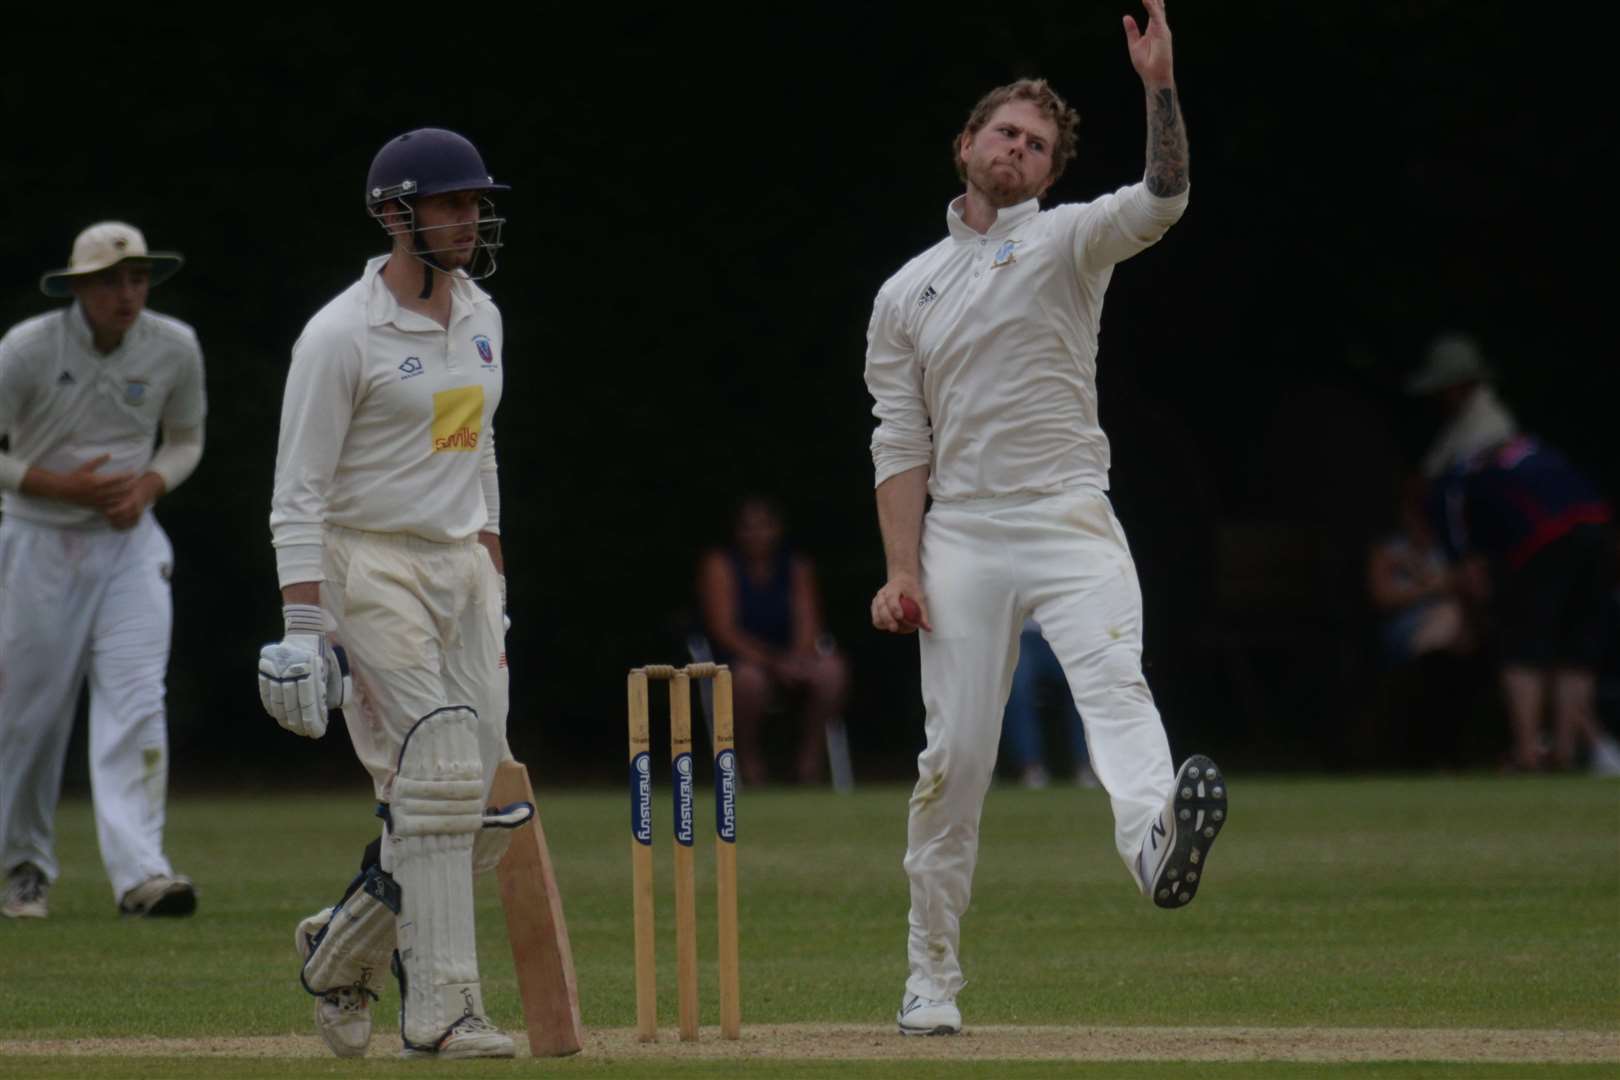 Tunbridge Wells batsman Christopher Williams watches the action as Canterbury's Elliott Lewis takes aim. Picture: Chris Davey